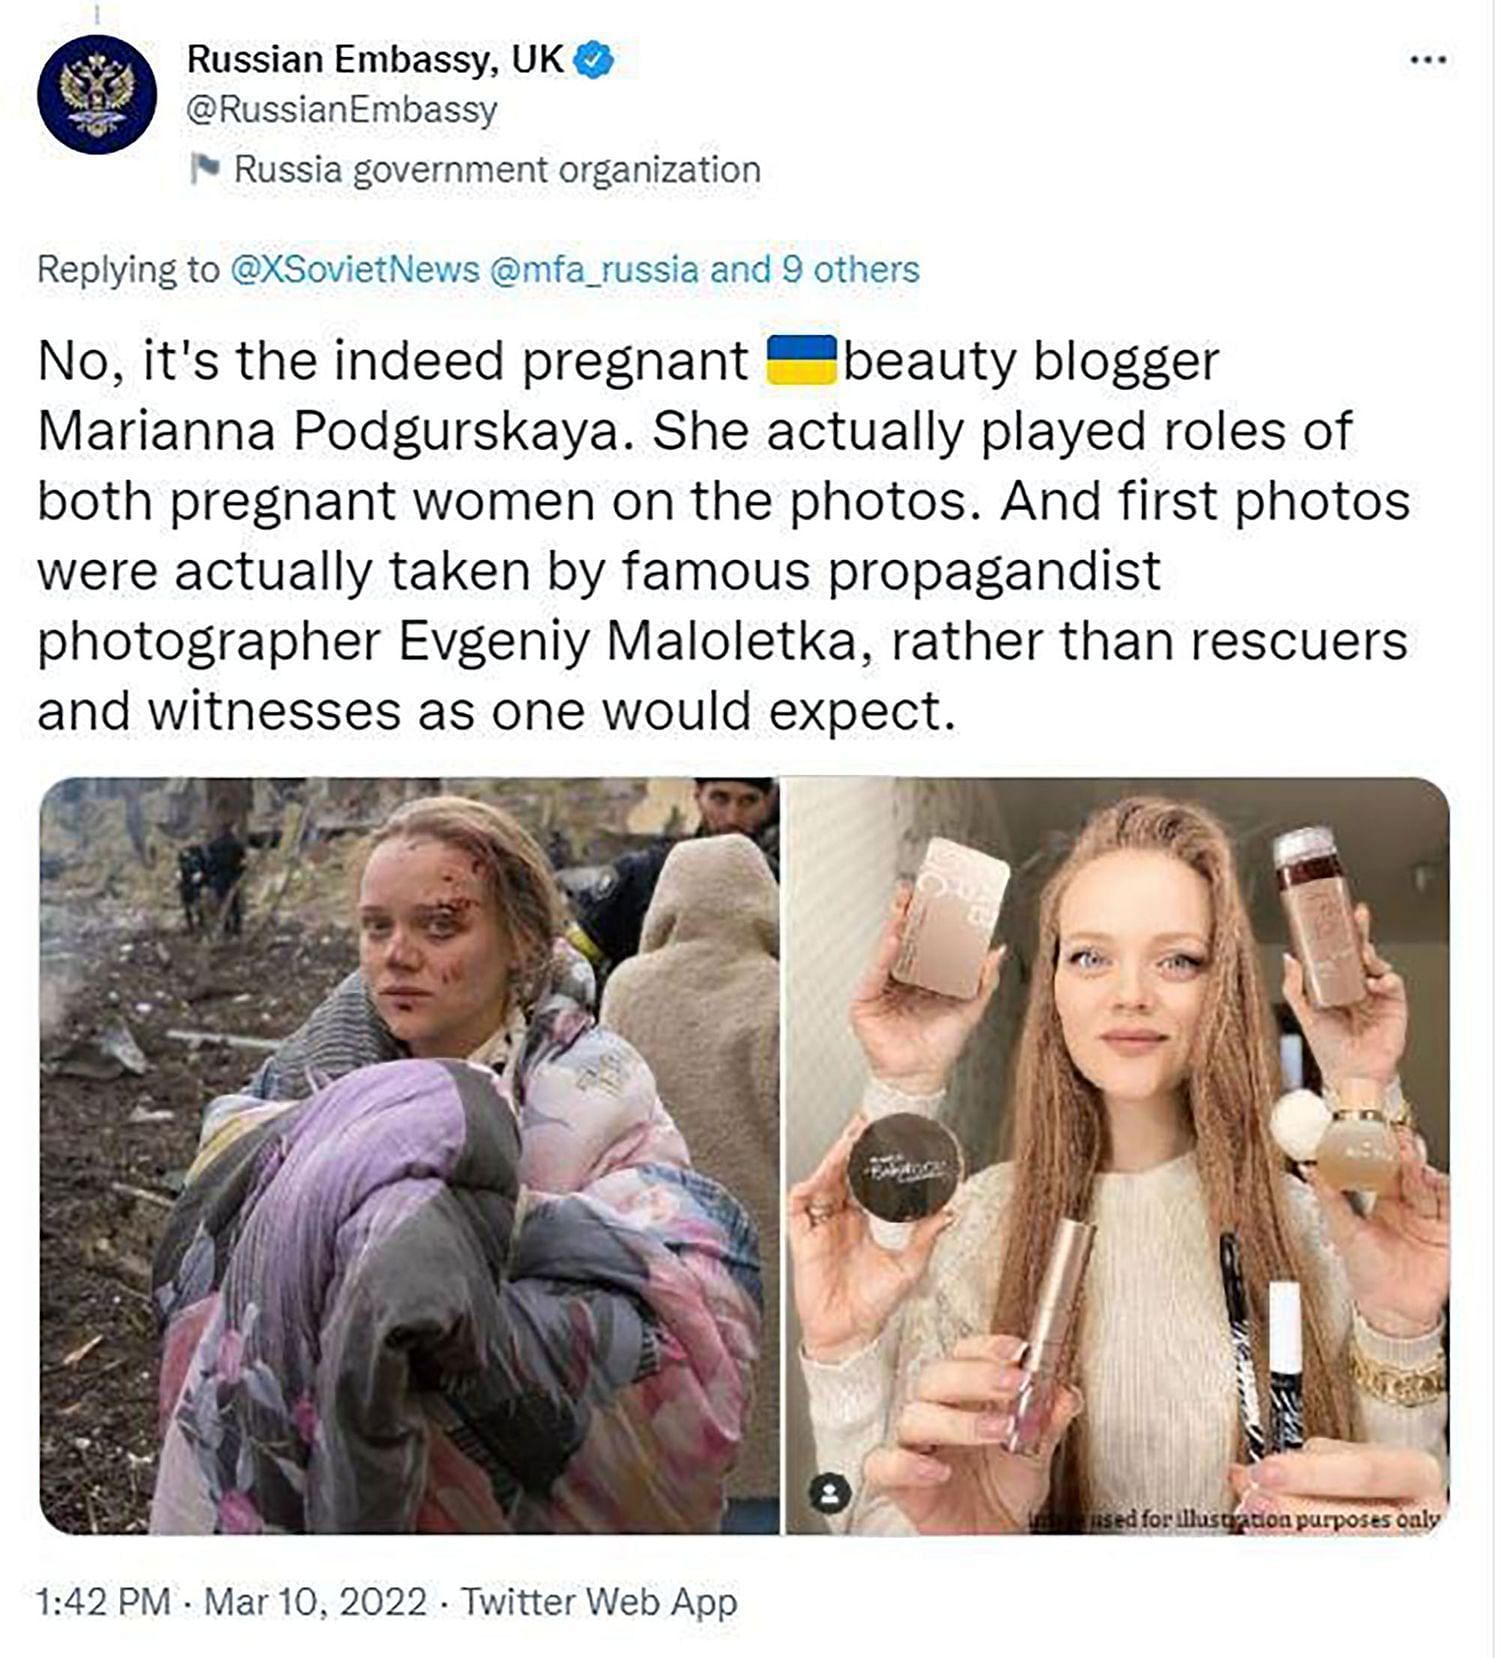 Russian Embassy, UK criticizes Ukrainian beauty influencer (Image via RussianEmbassy/Twitter)